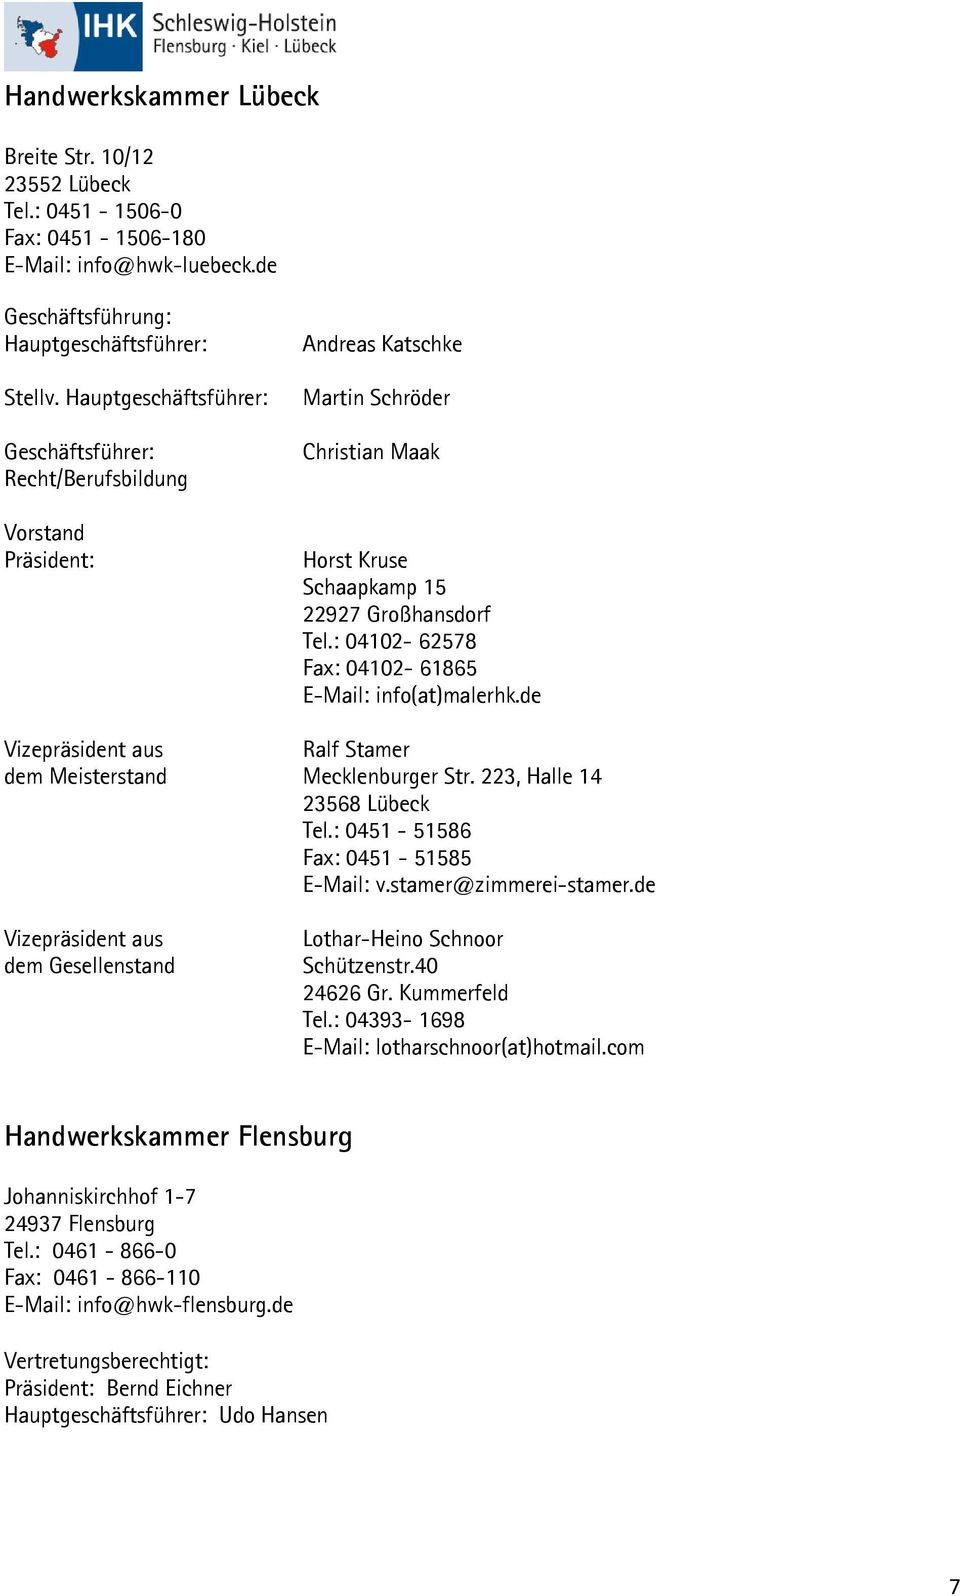 : 04102-62578 Fax: 04102-61865 E-Mail: info(at)malerhk.de Vizepräsident aus Ralf Stamer dem Meisterstand Mecklenburger Str. 223, Halle 14 23568 Lübeck Tel.: 0451-51586 Fax: 0451-51585 E-Mail: v.